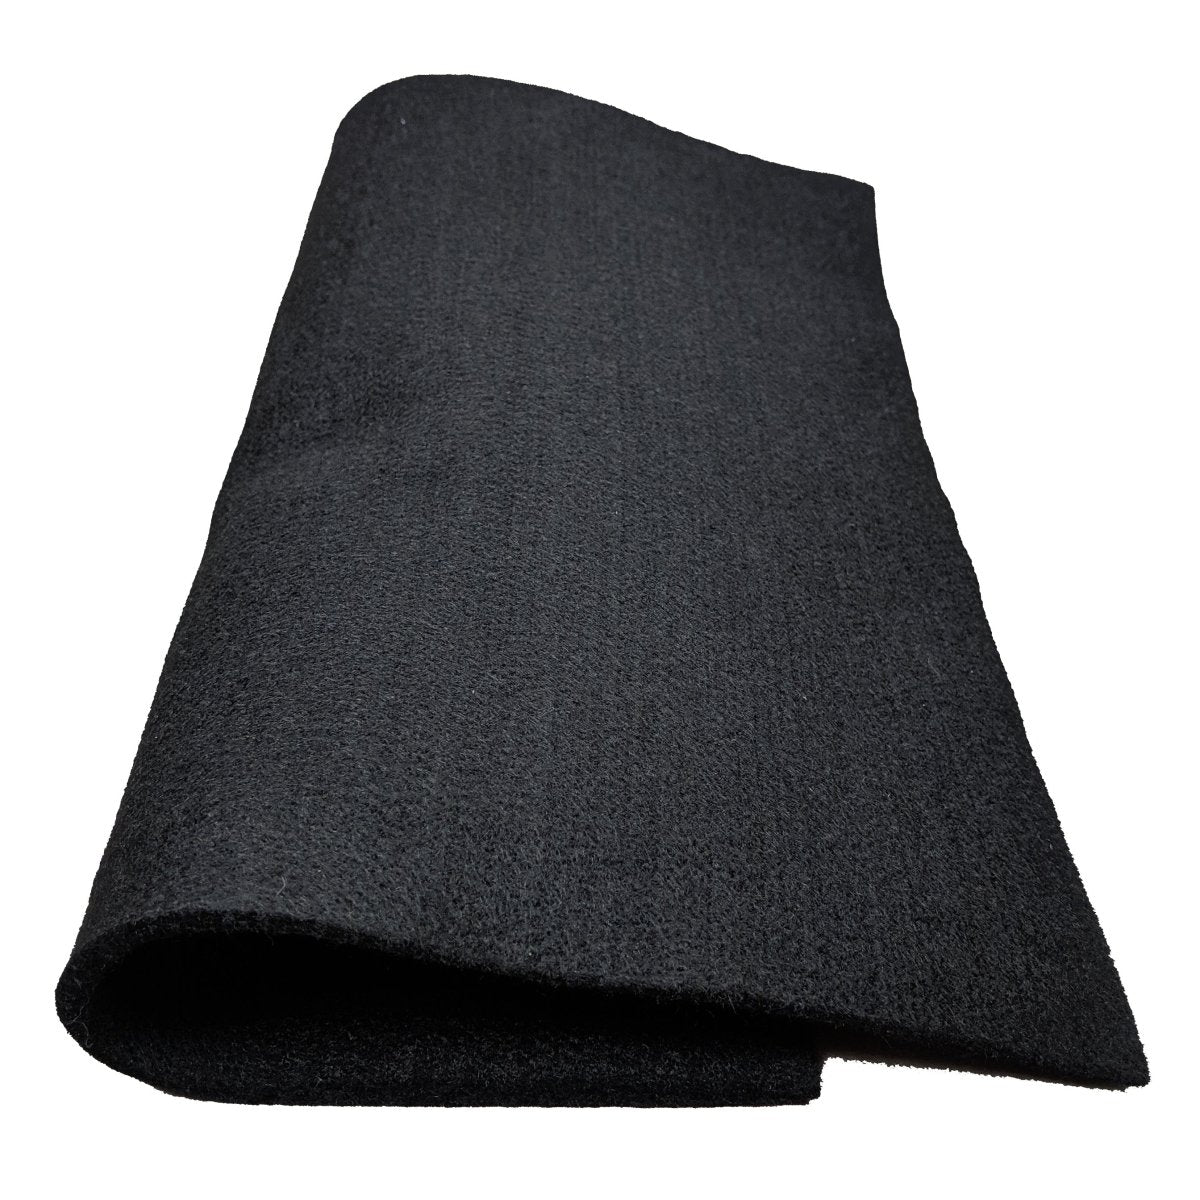 Welding Blanket Fireproof, Heat Resistant Up To 1800F, Flame Retardant  Fabric Material Carbon Felt for Welders